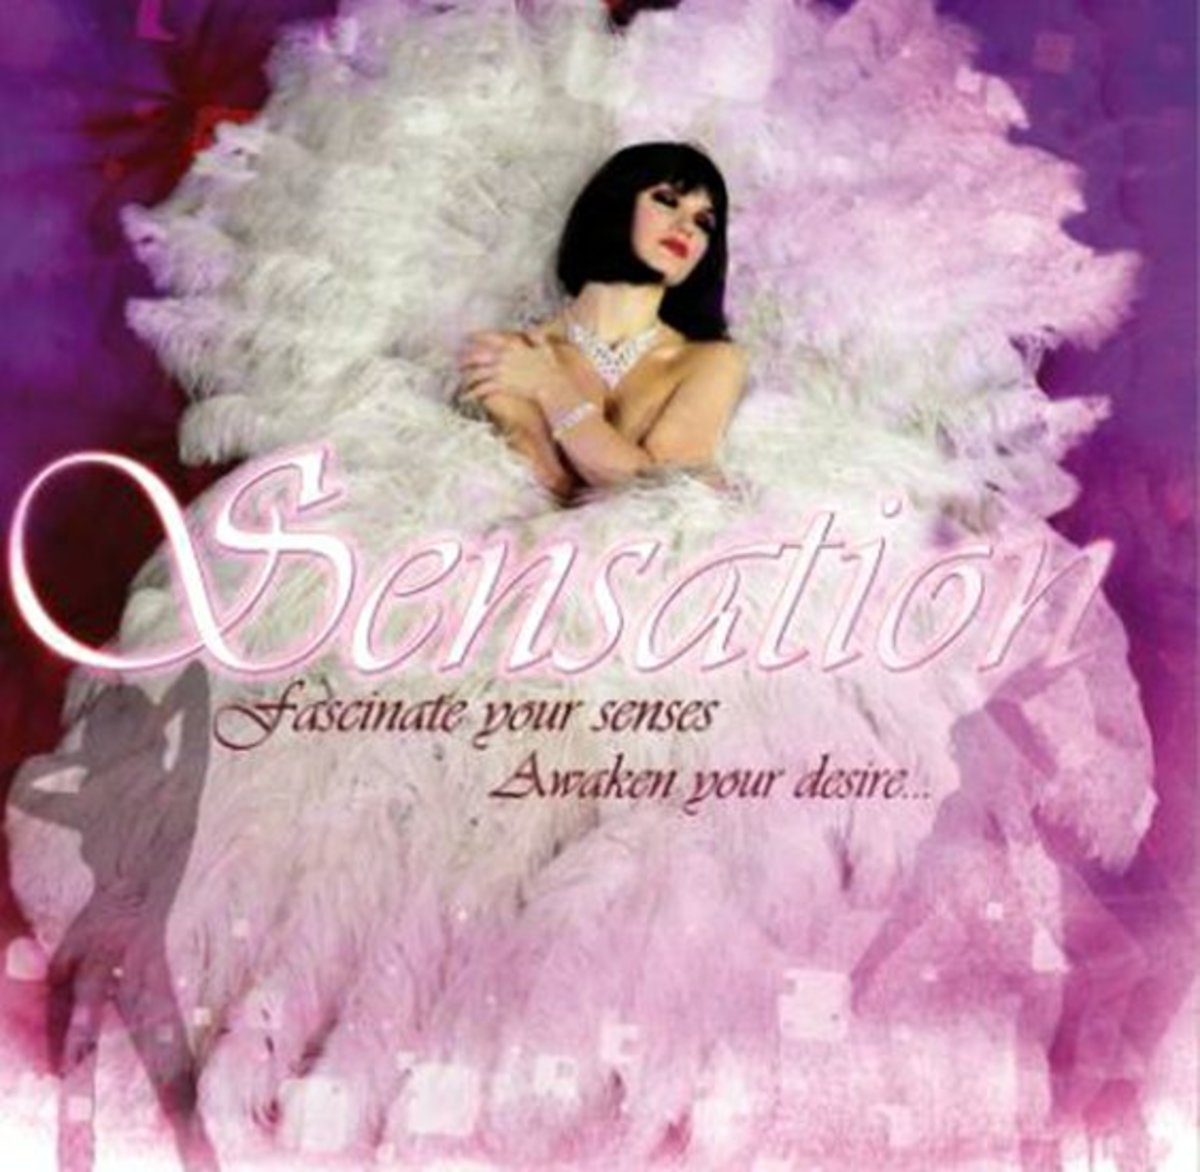 Poster for 'Sensation' show